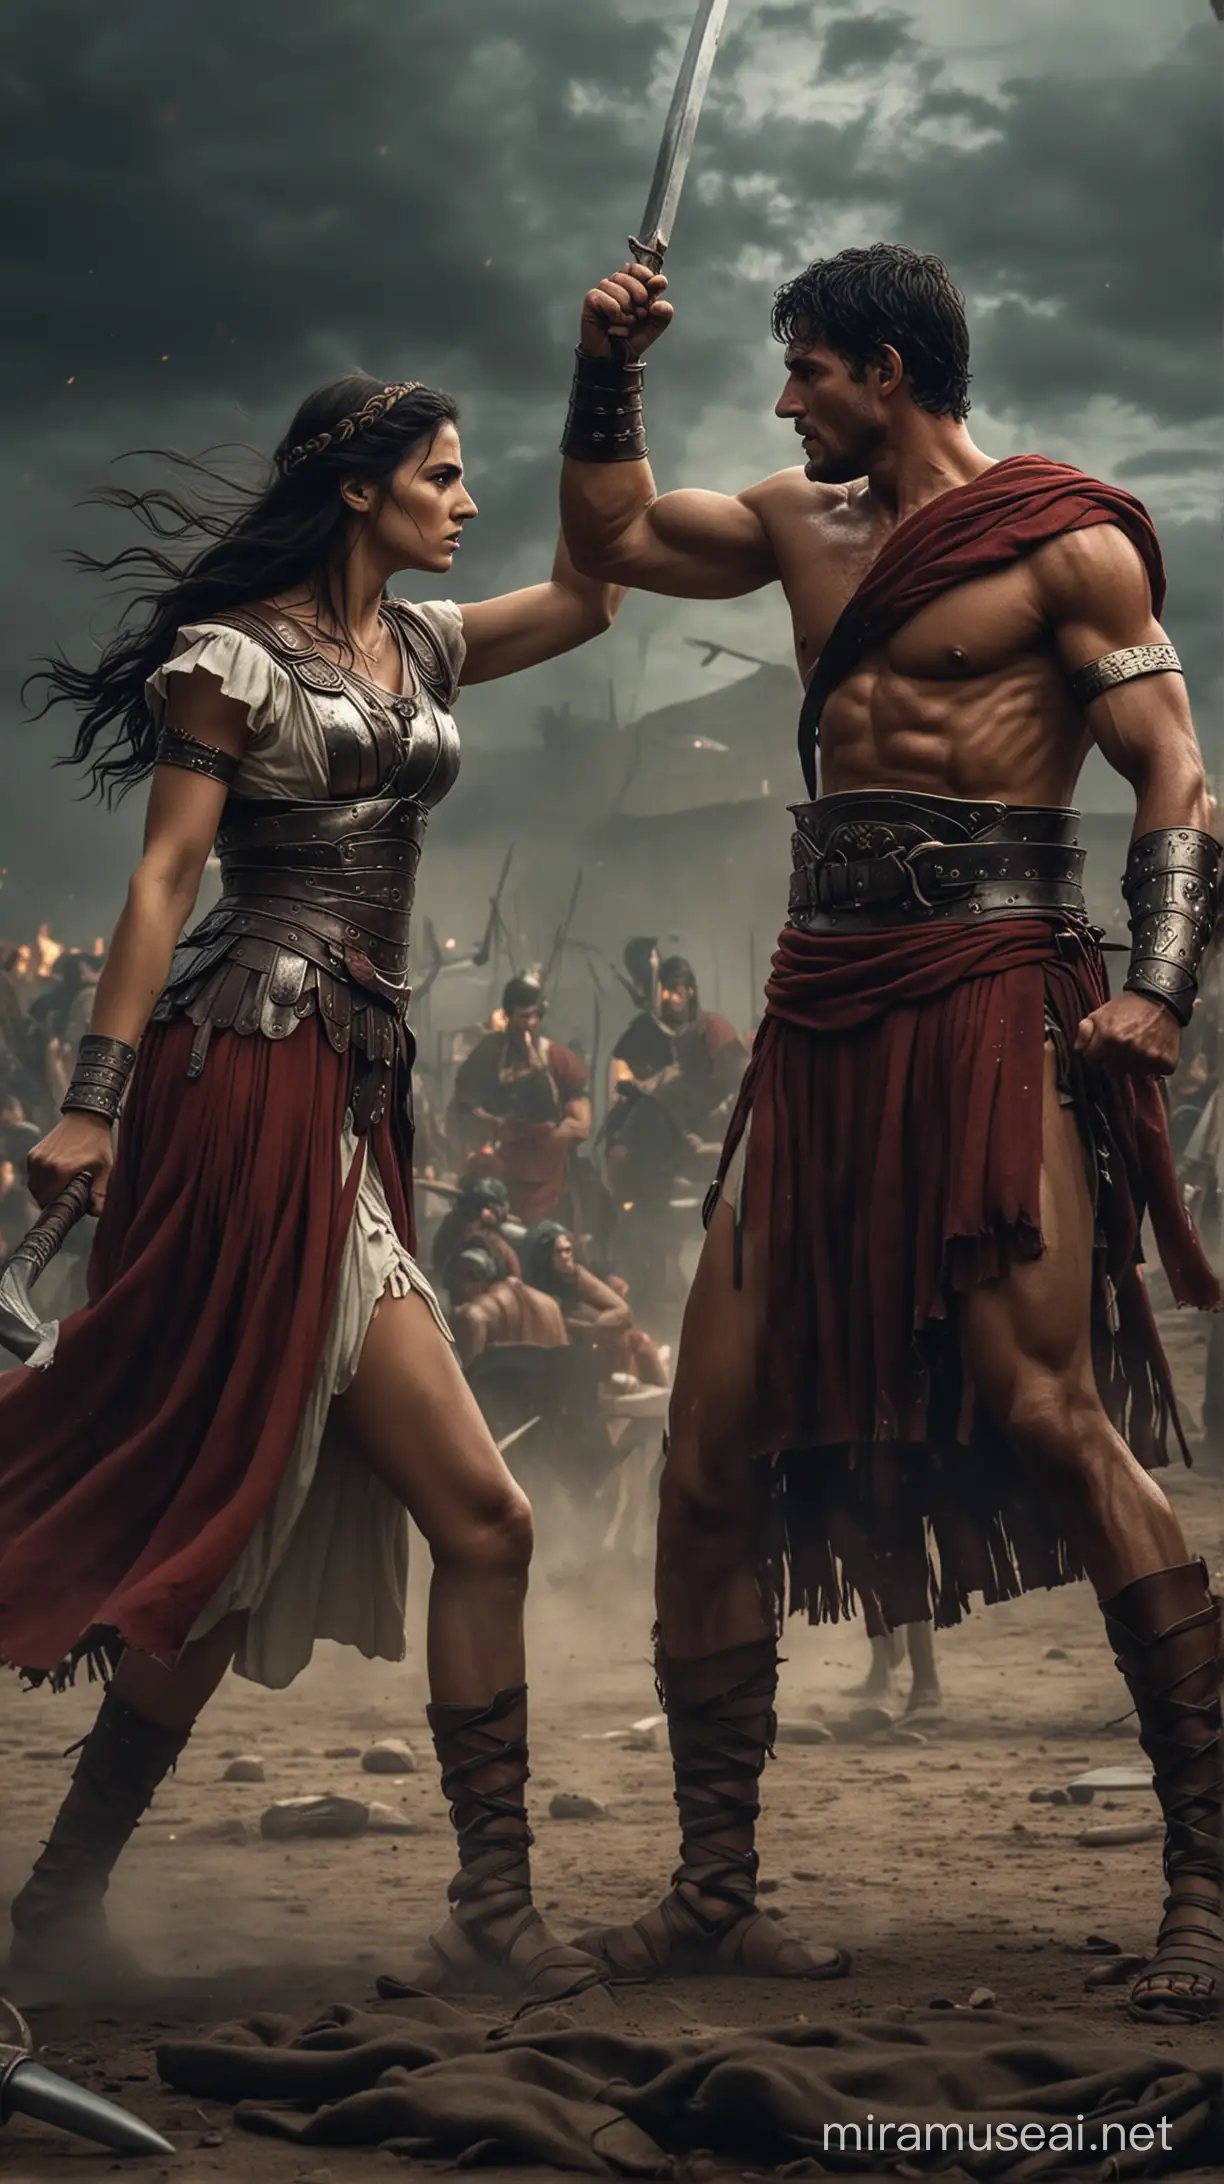 Roman Octavia fighting with Mark Antony in a moody background